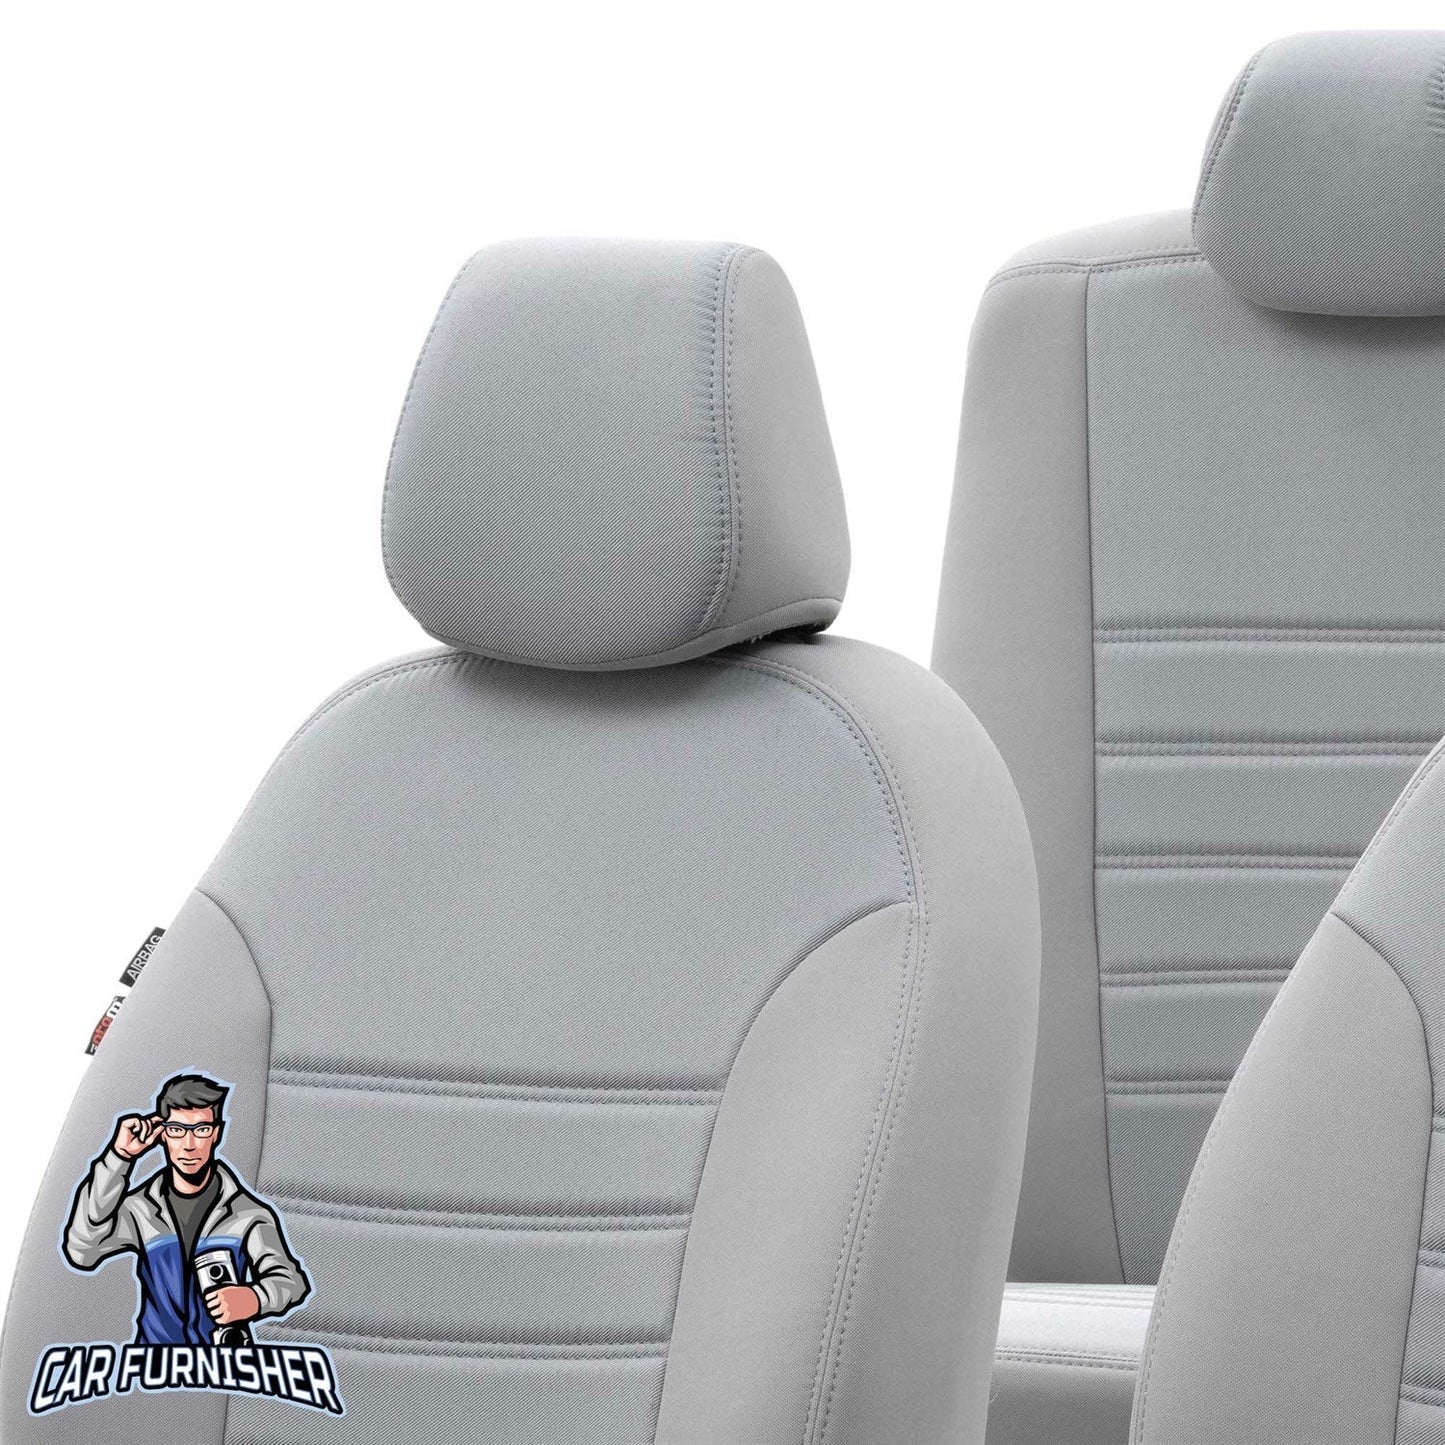 Ford Fiesta Seat Covers Original Jacquard Design Light Gray Jacquard Fabric